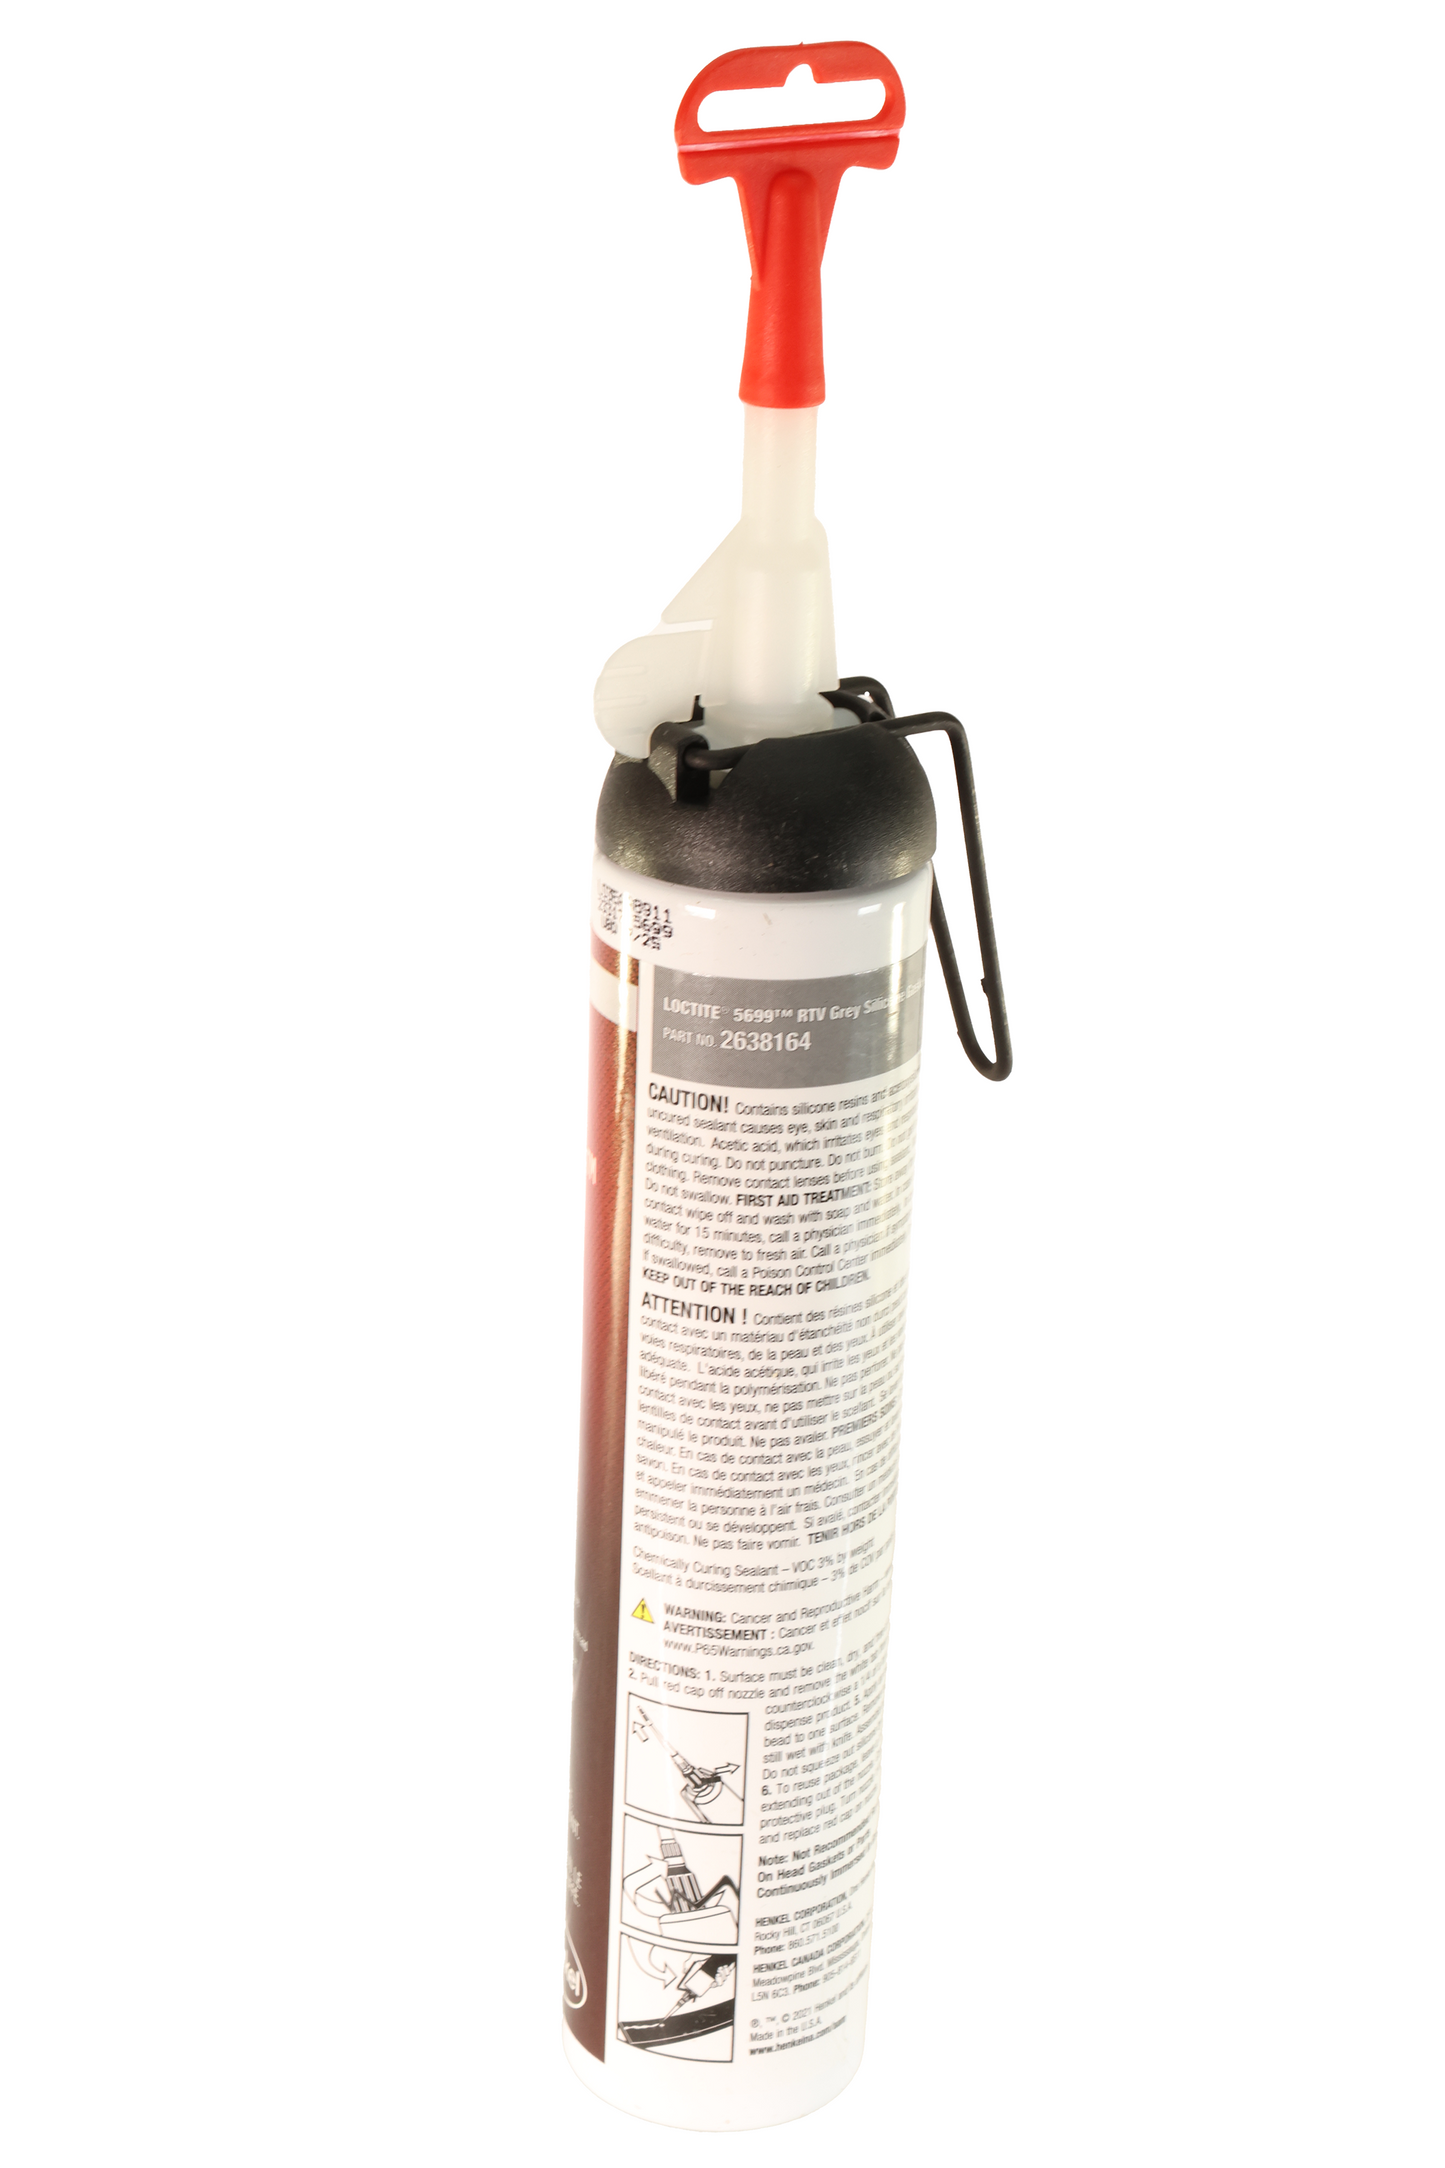 John Deere Original Equipment Liquid Gasket - PM2638164